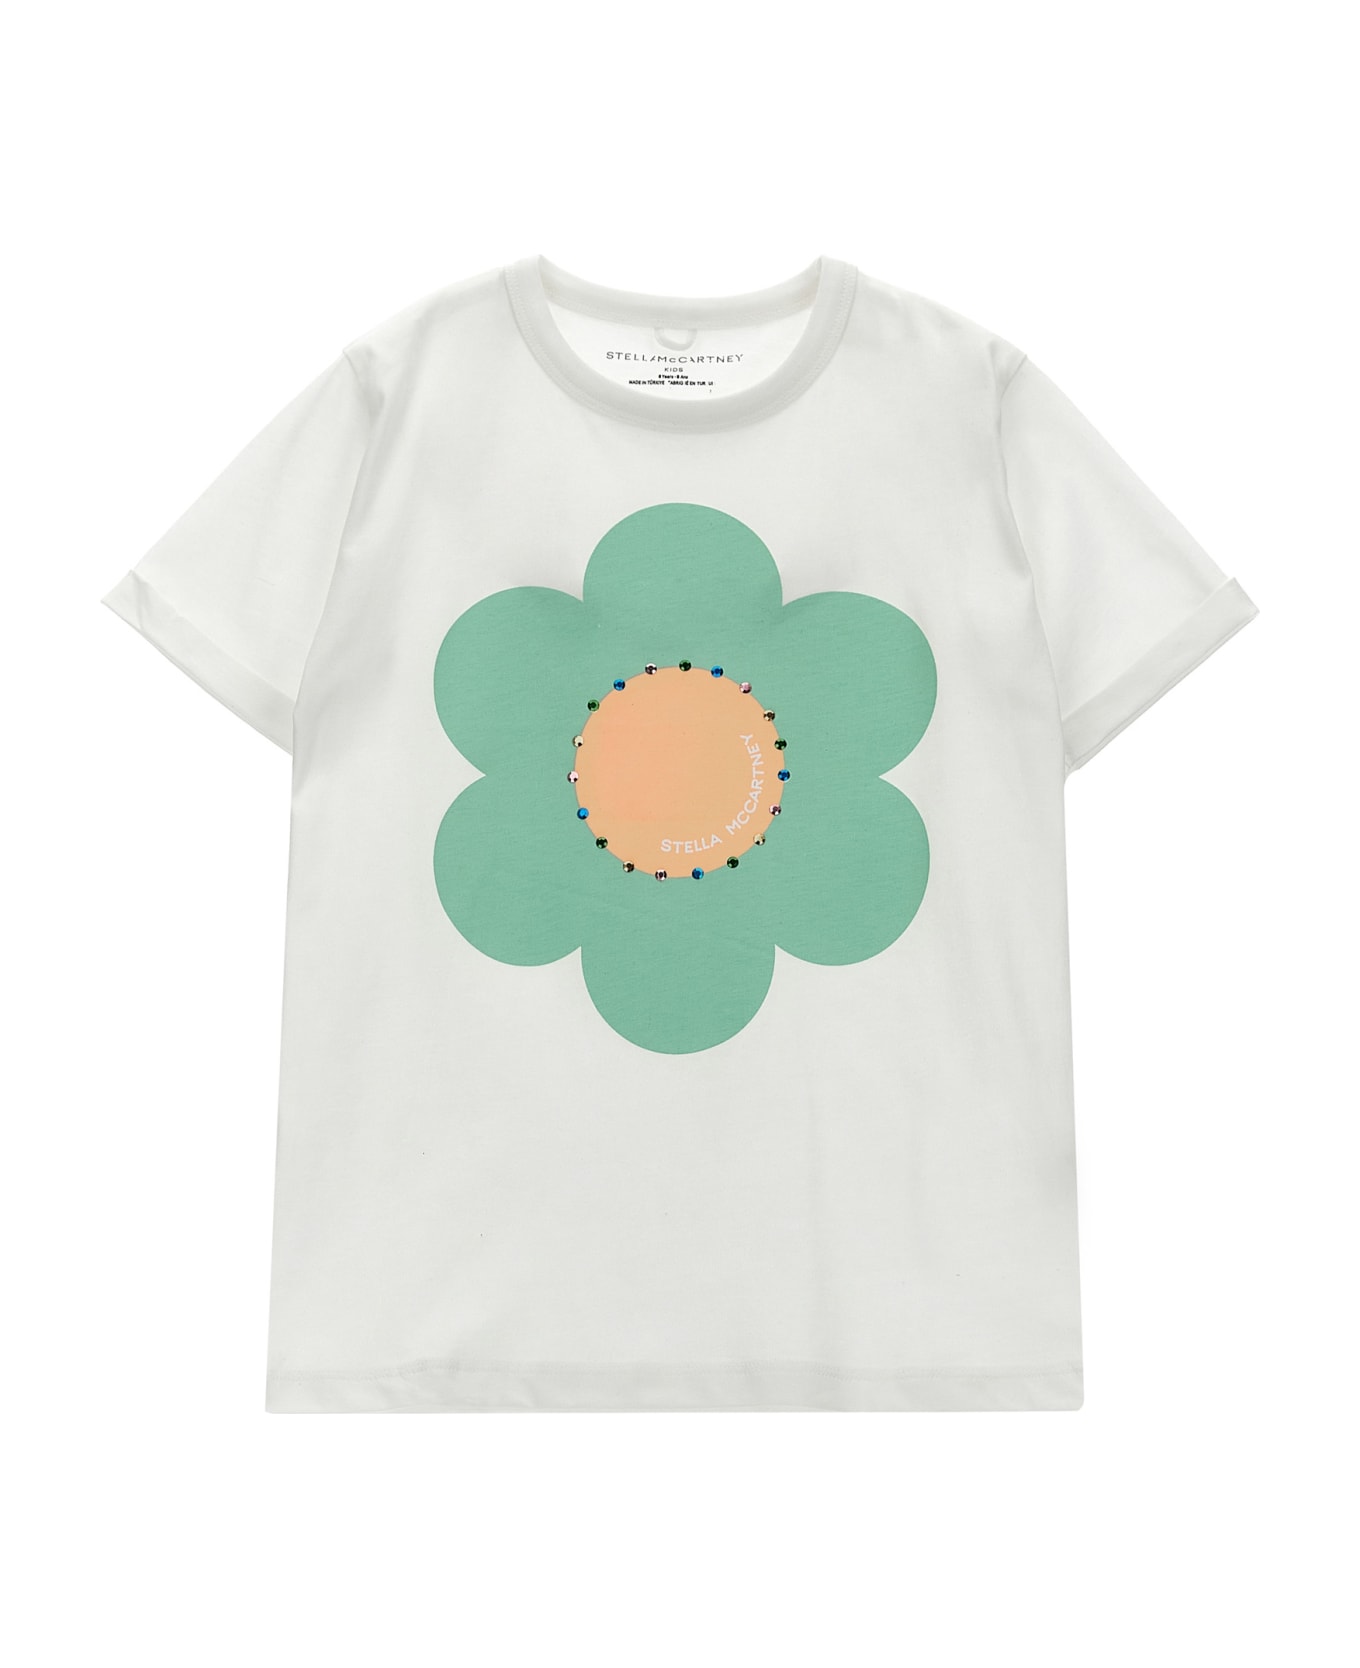 Stella McCartney Kids Print And Rhinestone T-shirt - White